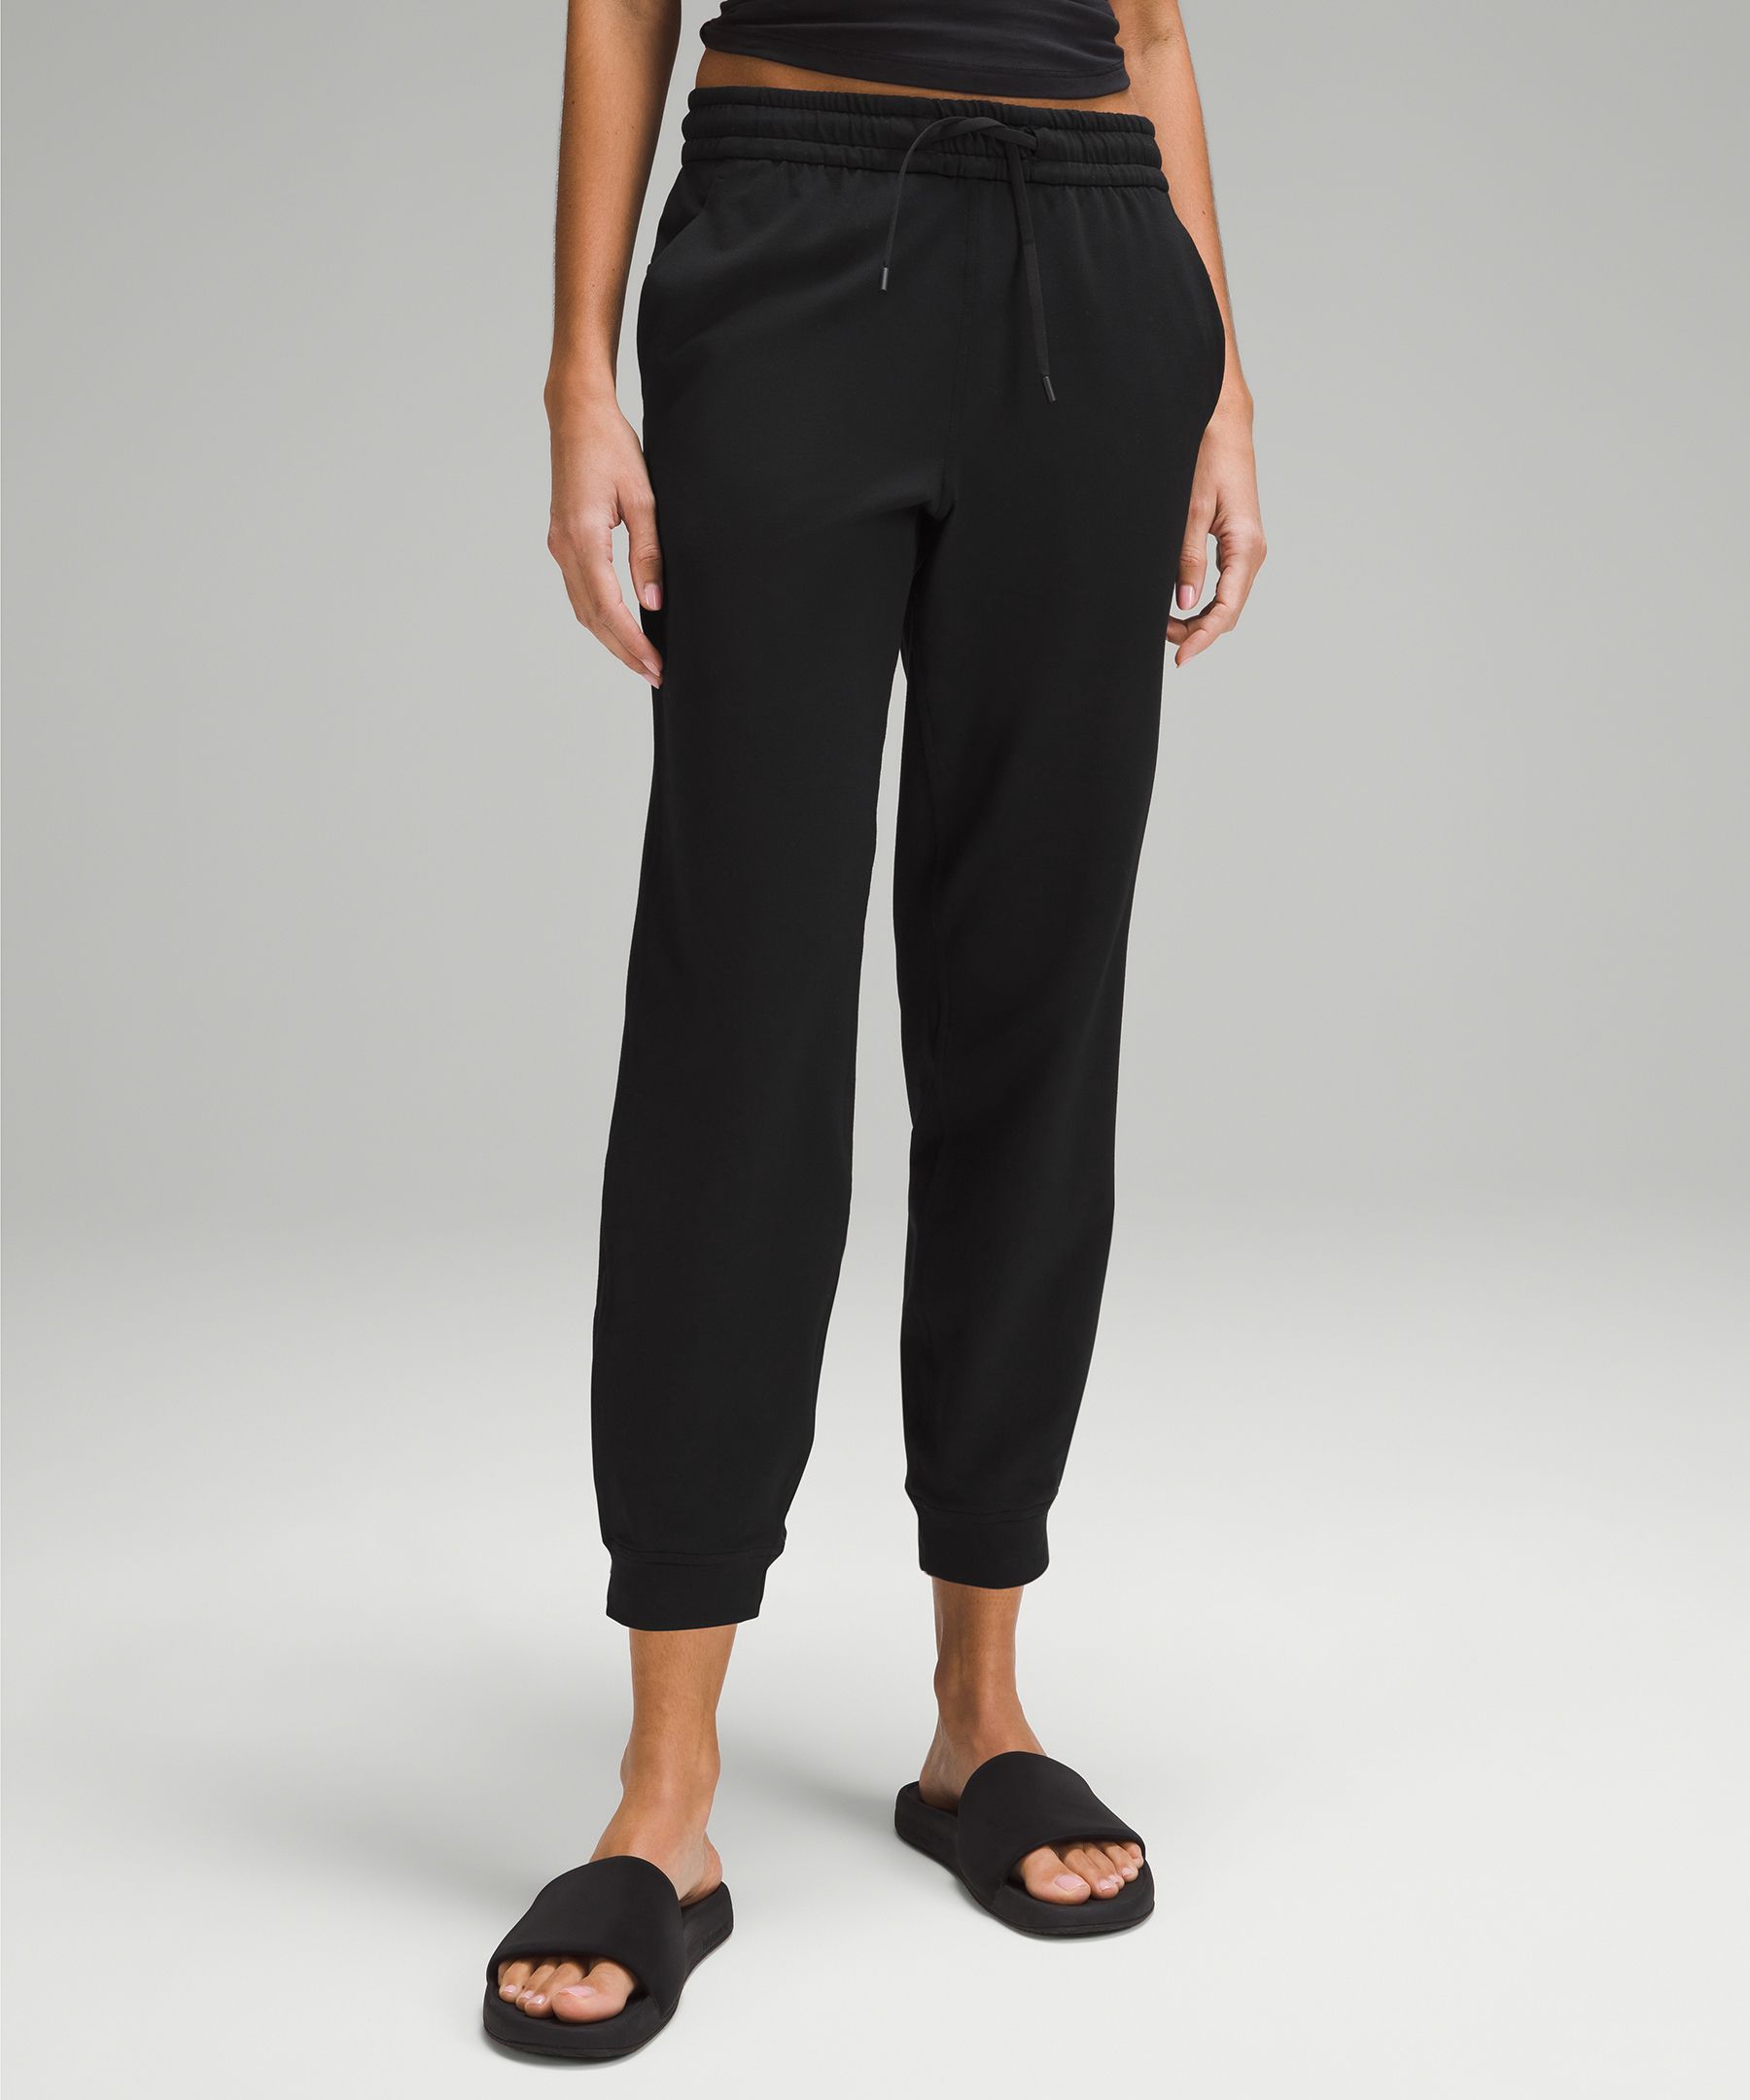  Womens Soft Yoga Shorts -High Waisted Spandex Slip Shorts 2  Pack Black Large